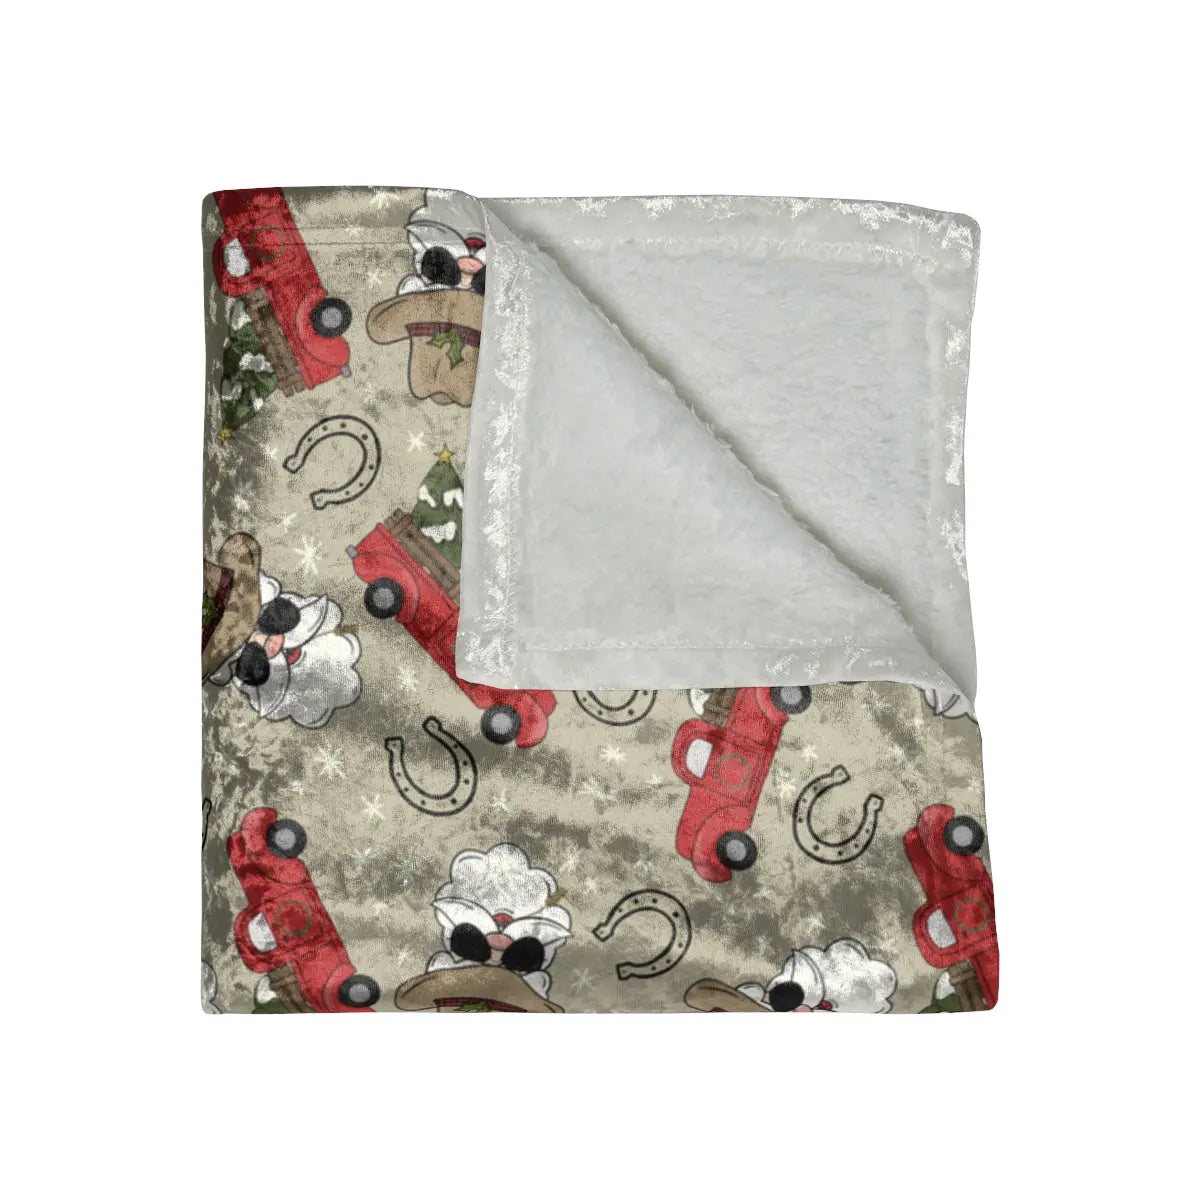 Western Santa Crushed Velvet Blanket - Hey There Crafty LLC